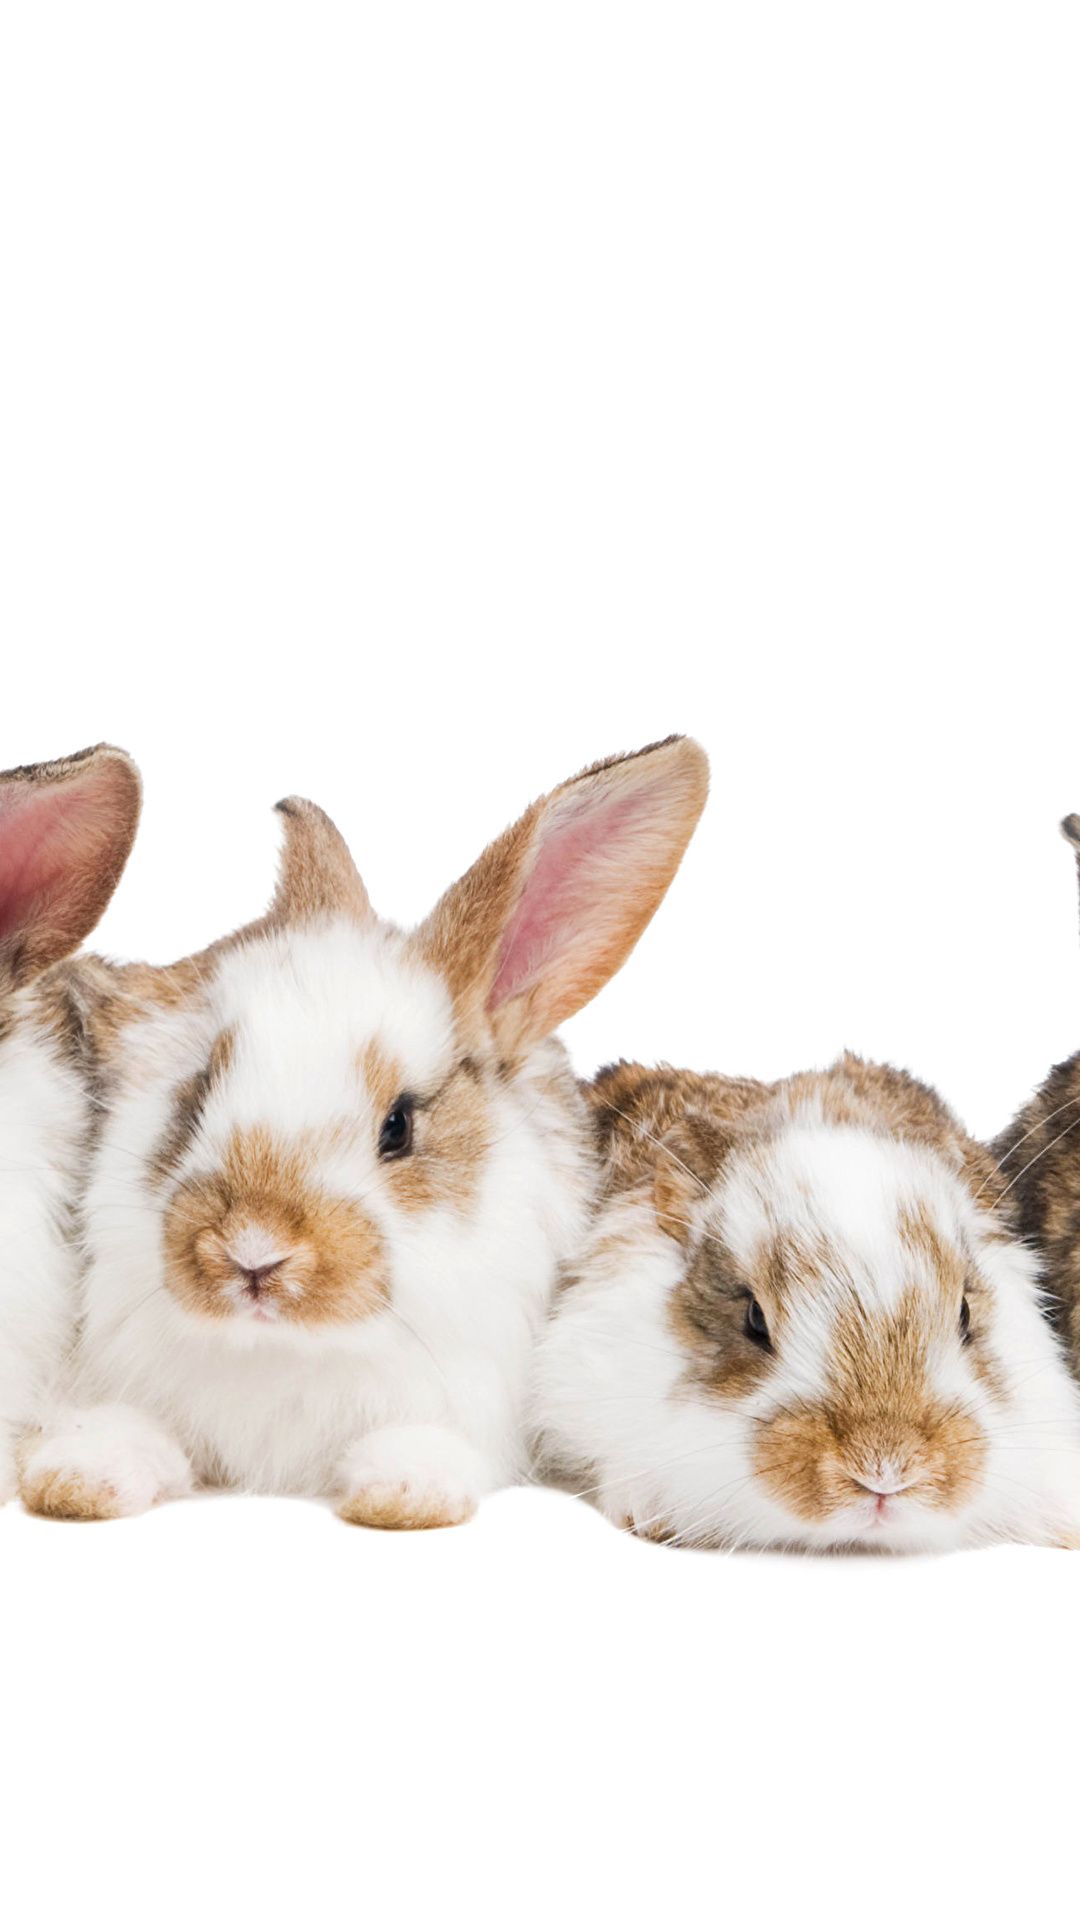 Desktop Wallpaper Rabbits animal White background 1080x1920